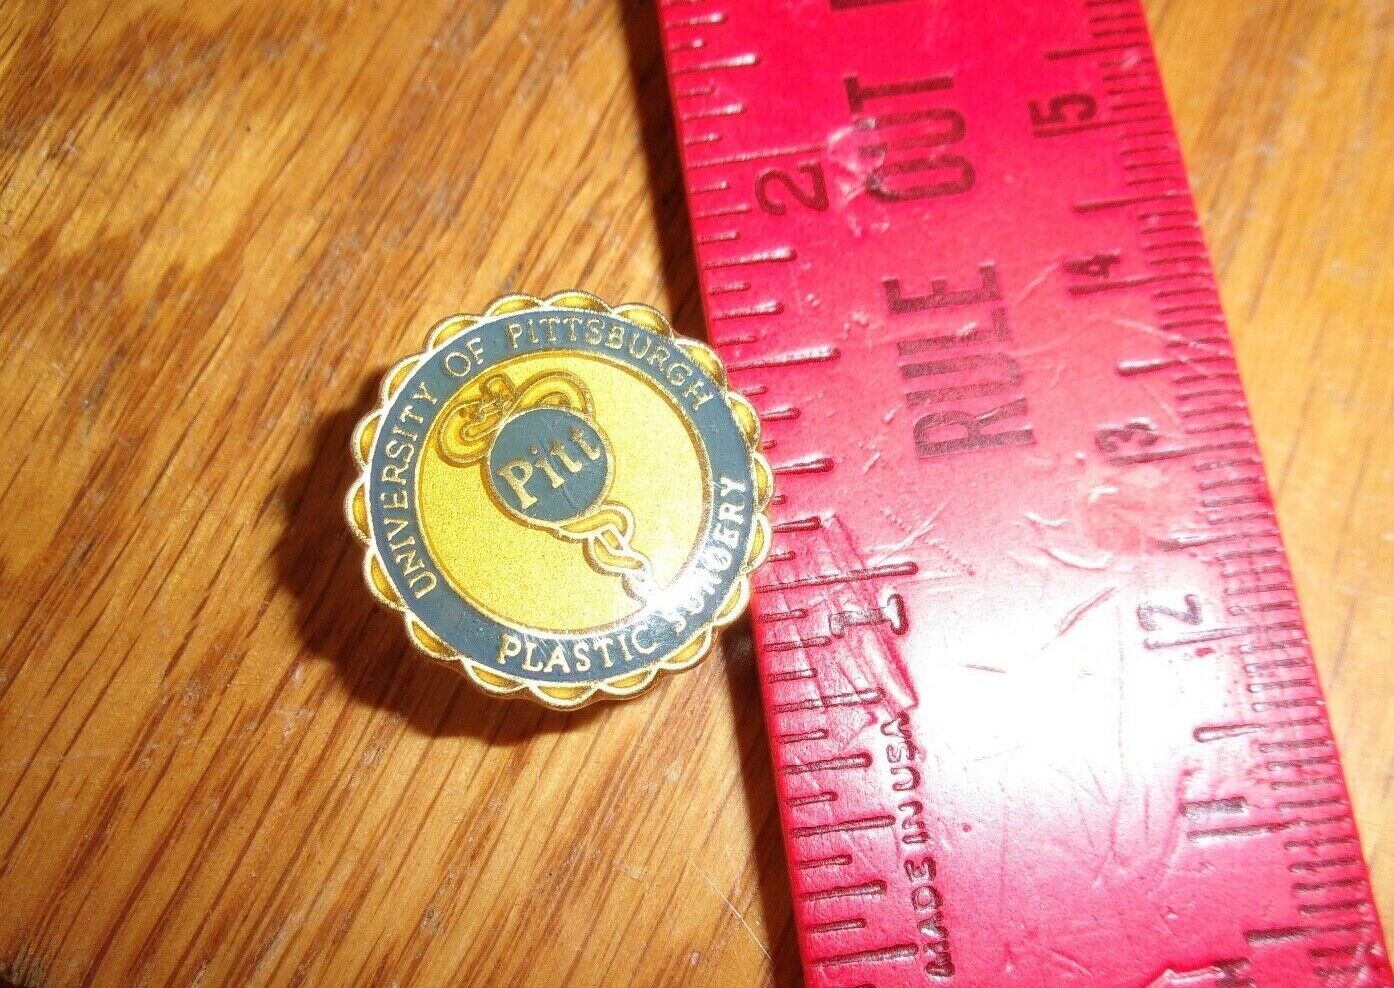 Vintage University of Pittsburgh Plastic Surgery Lapel Pin gold tone Surgeon 